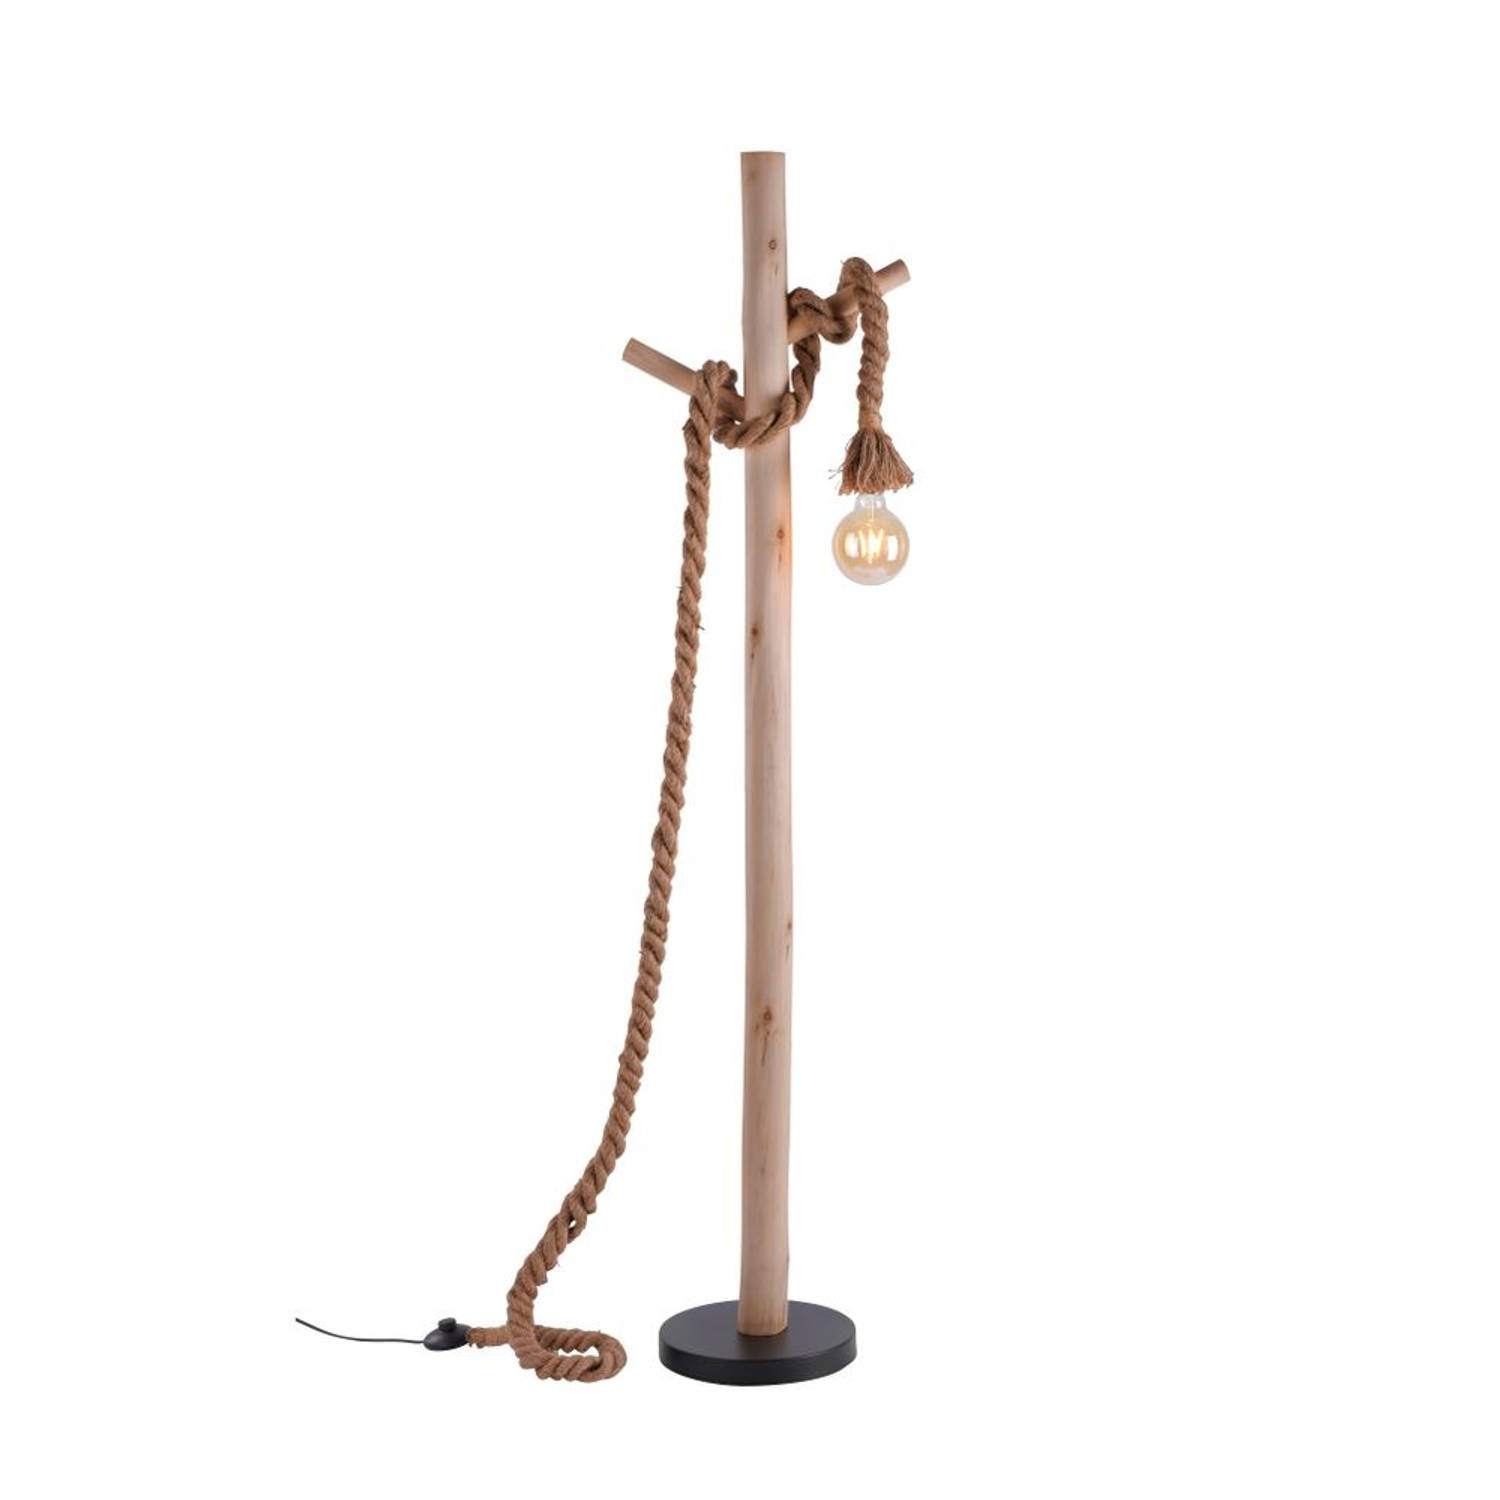 Paul Neuhaus Vloerlamp Rope H 150 cm bruin-zwart